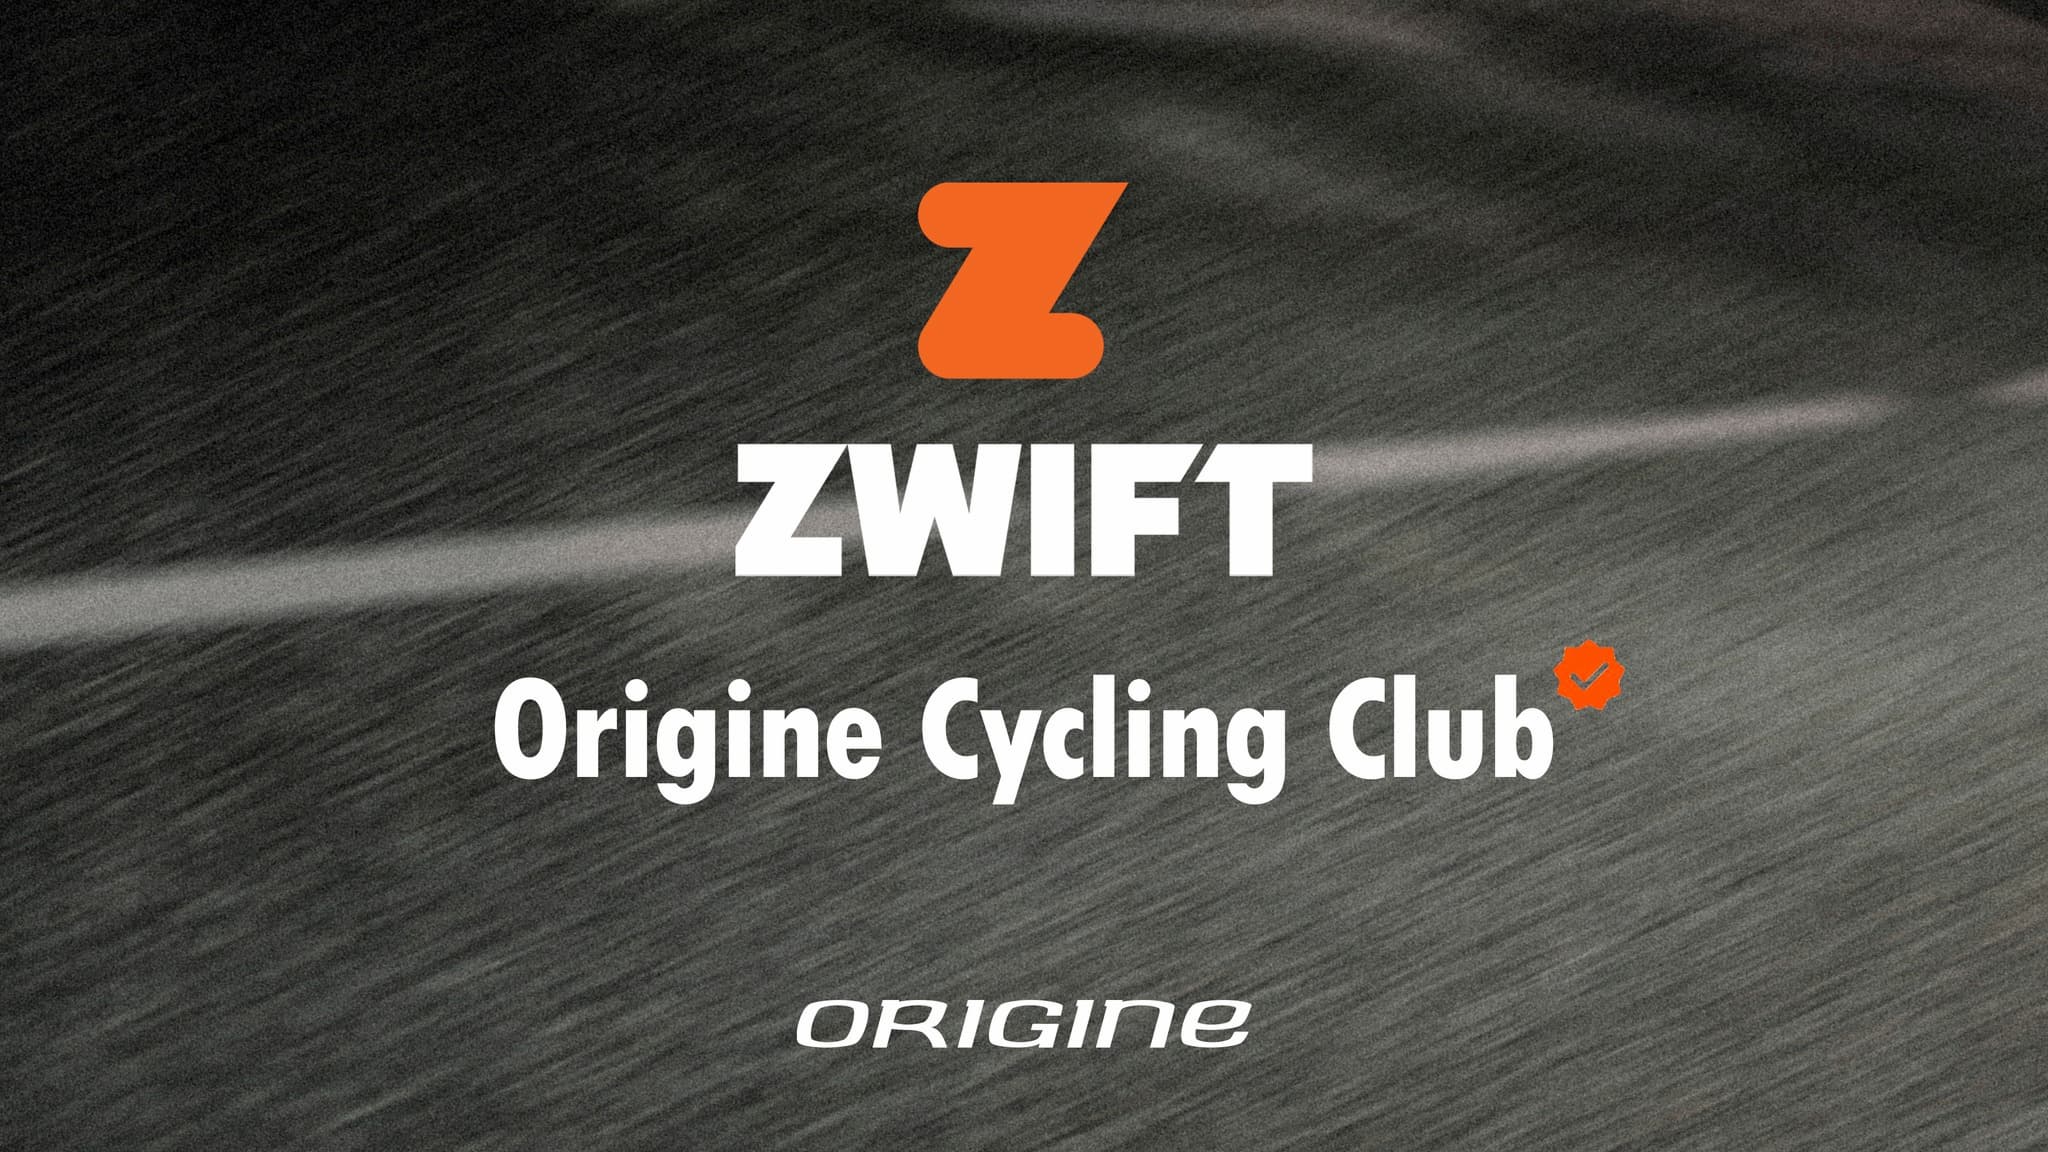 Zwift Origine Cycling Club